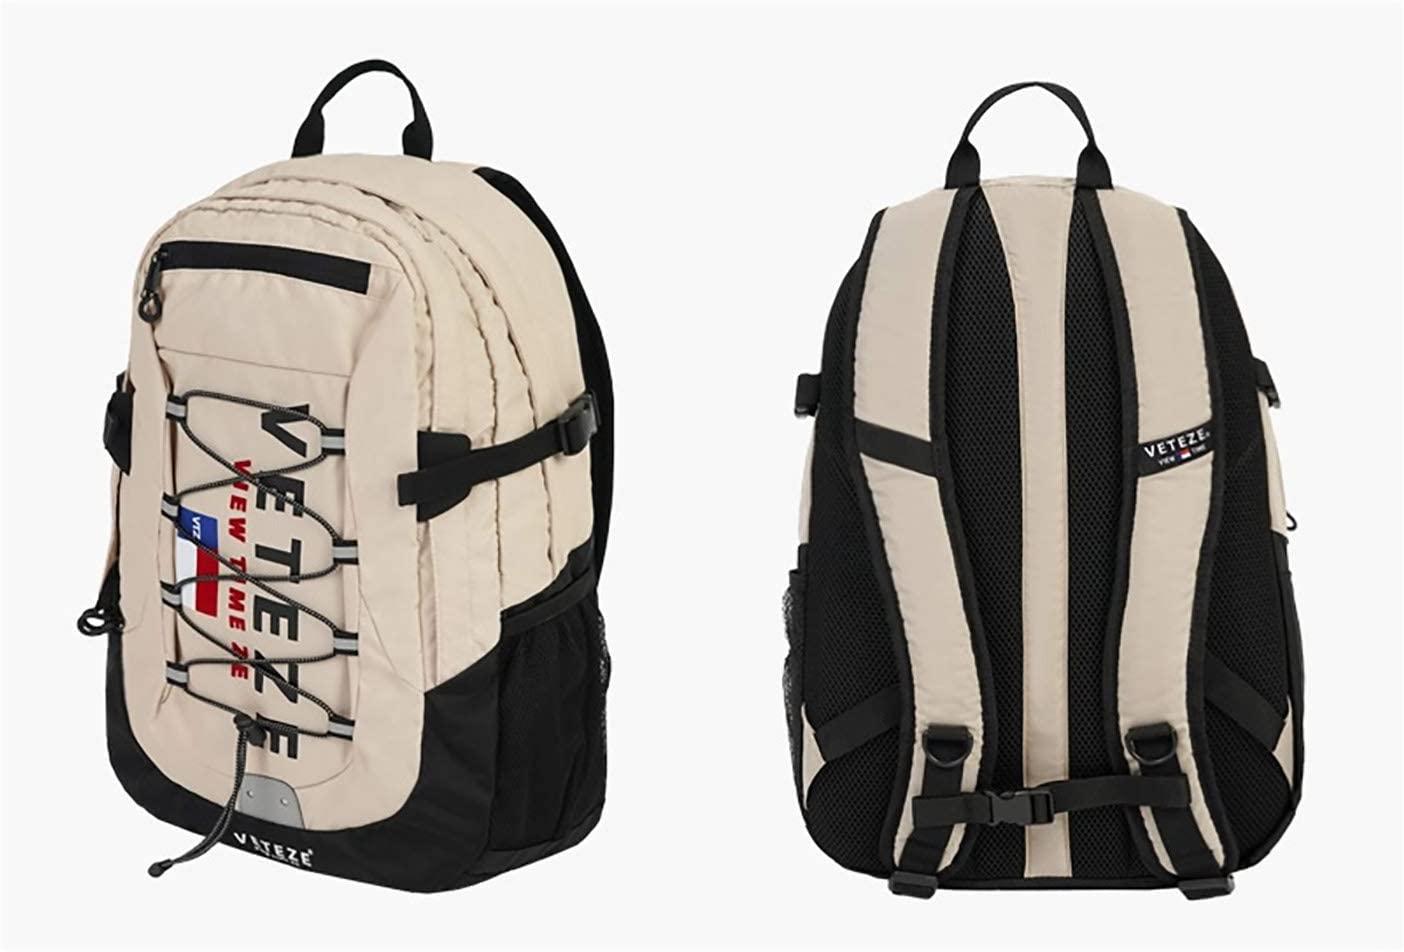 VETEZE Big Logo Backpack Retro Contemporary Unisex Laptop Bag for School Travel Hot Item from Korea (Beige) - Pretty Mira Shop